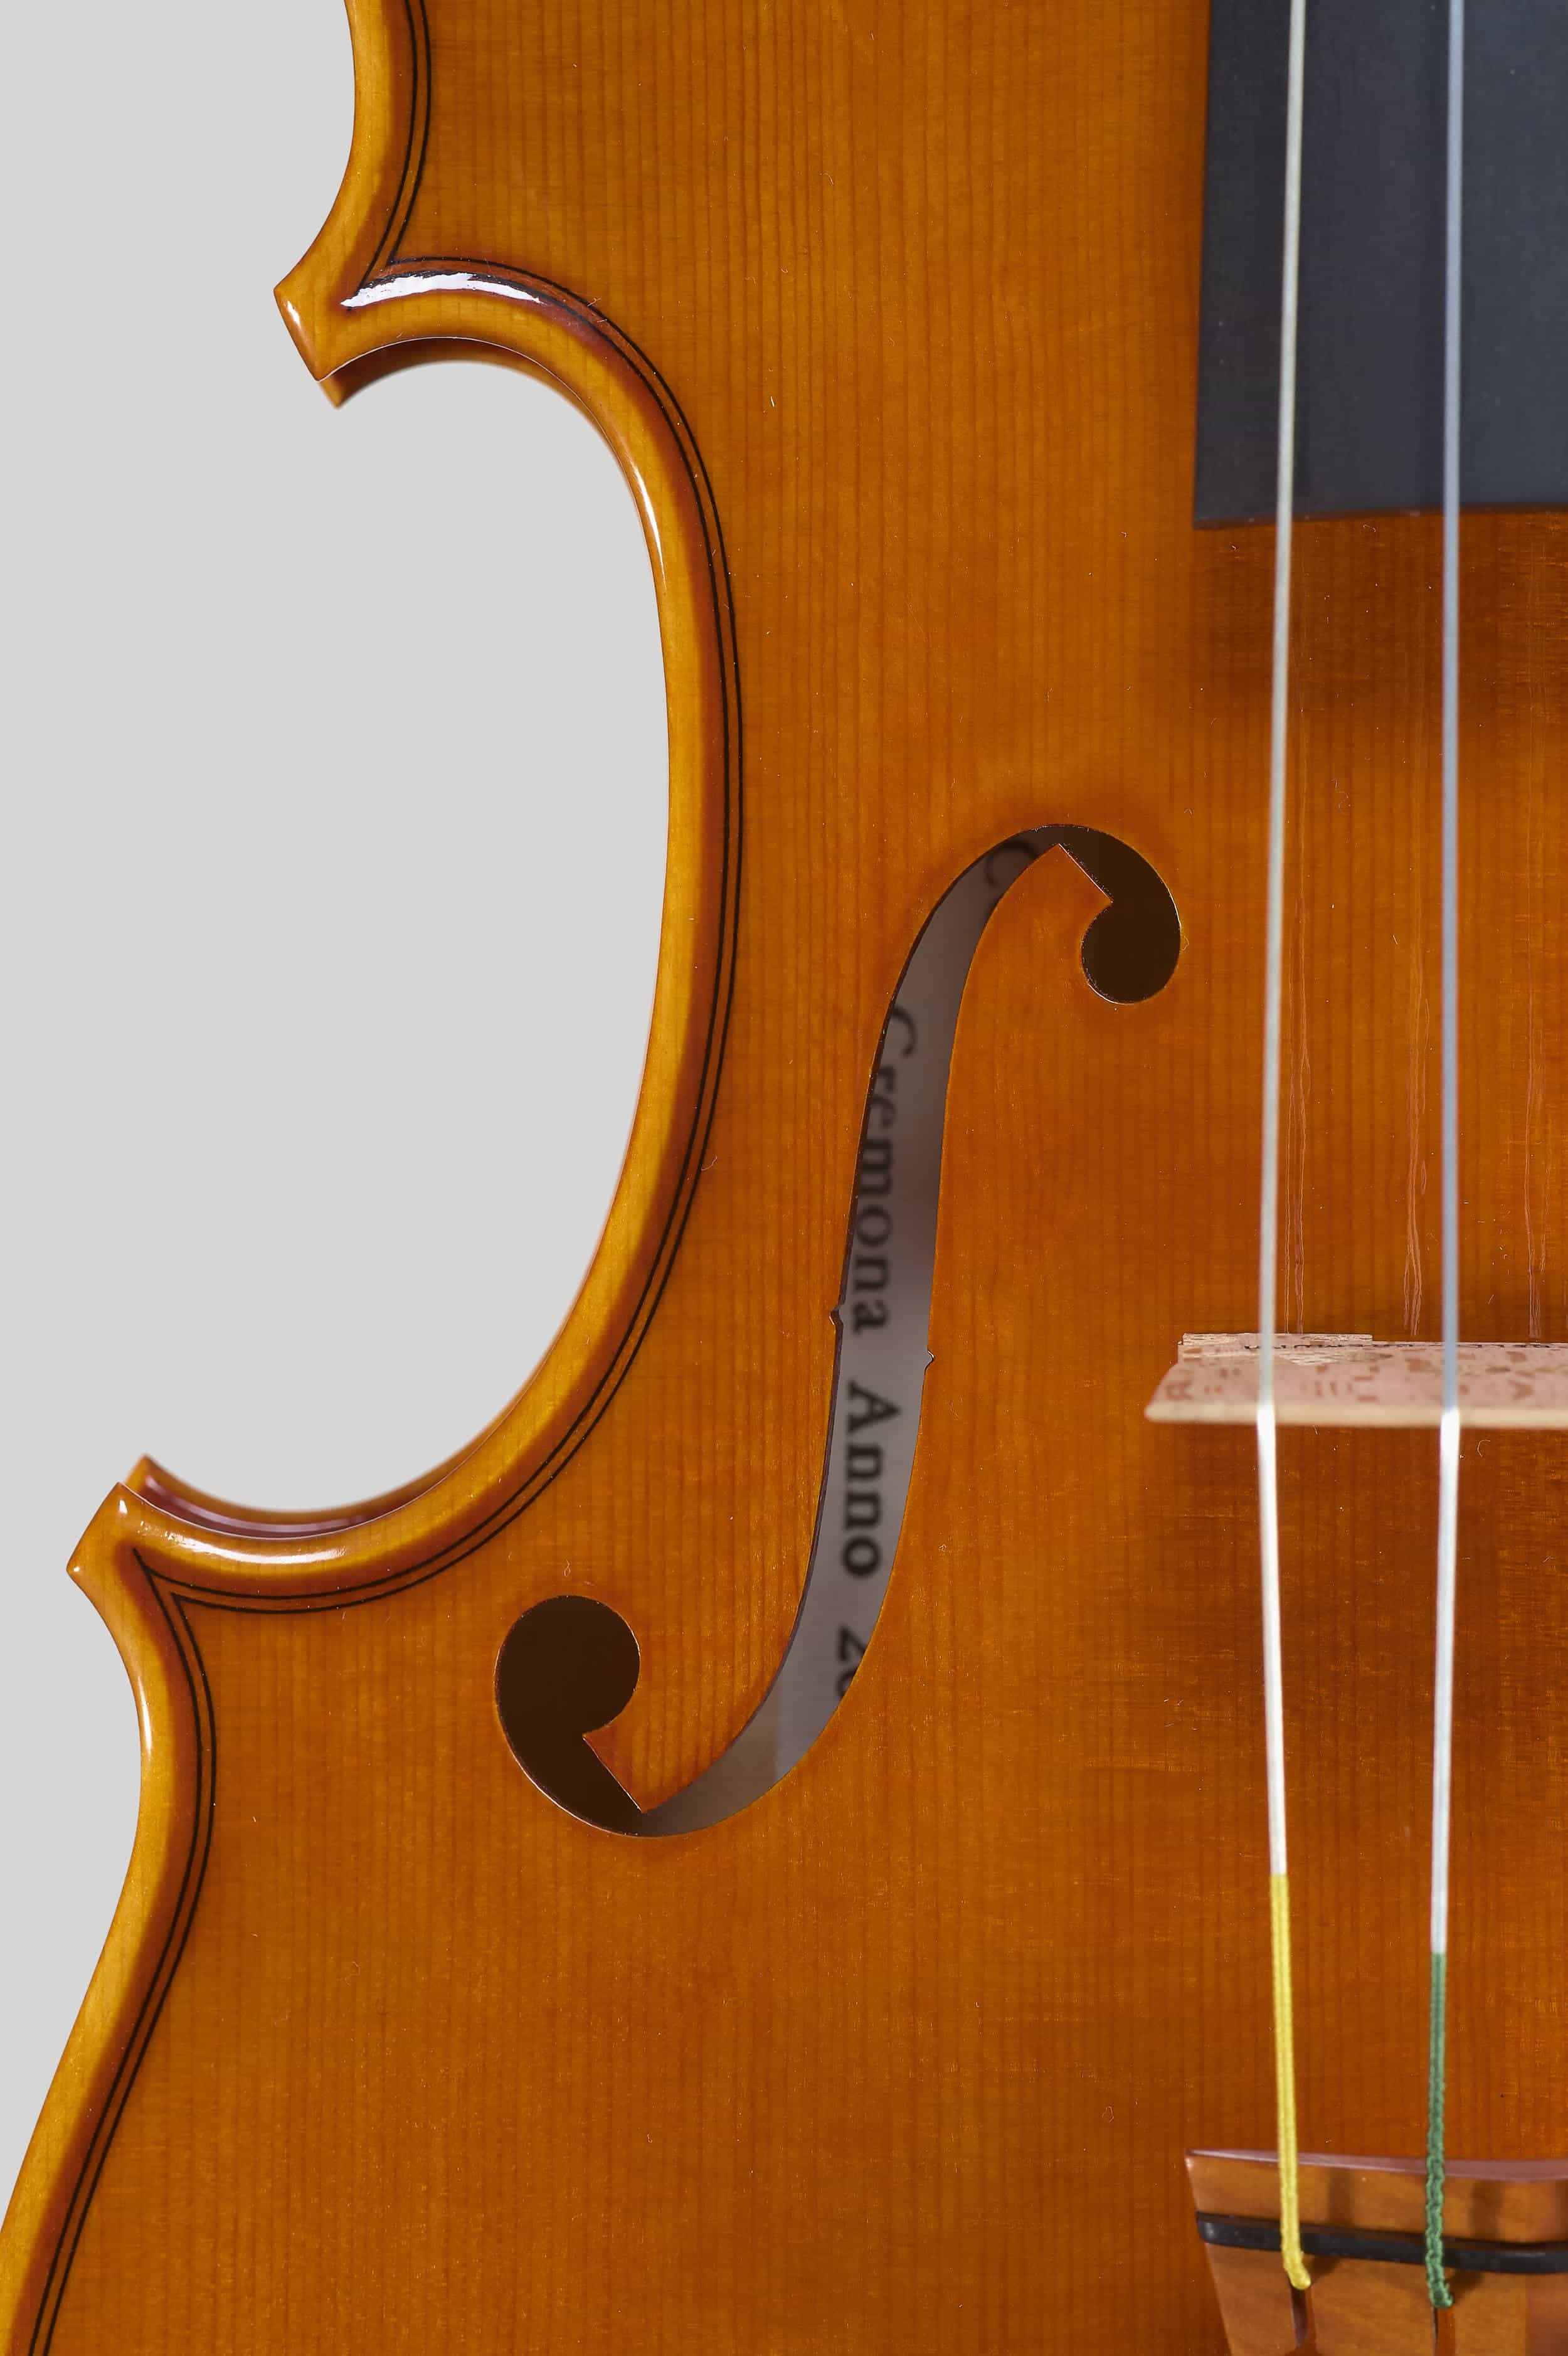 Anno 2017 - Violino modello stile A. Stradivari “Viotti” 1709 - Effe